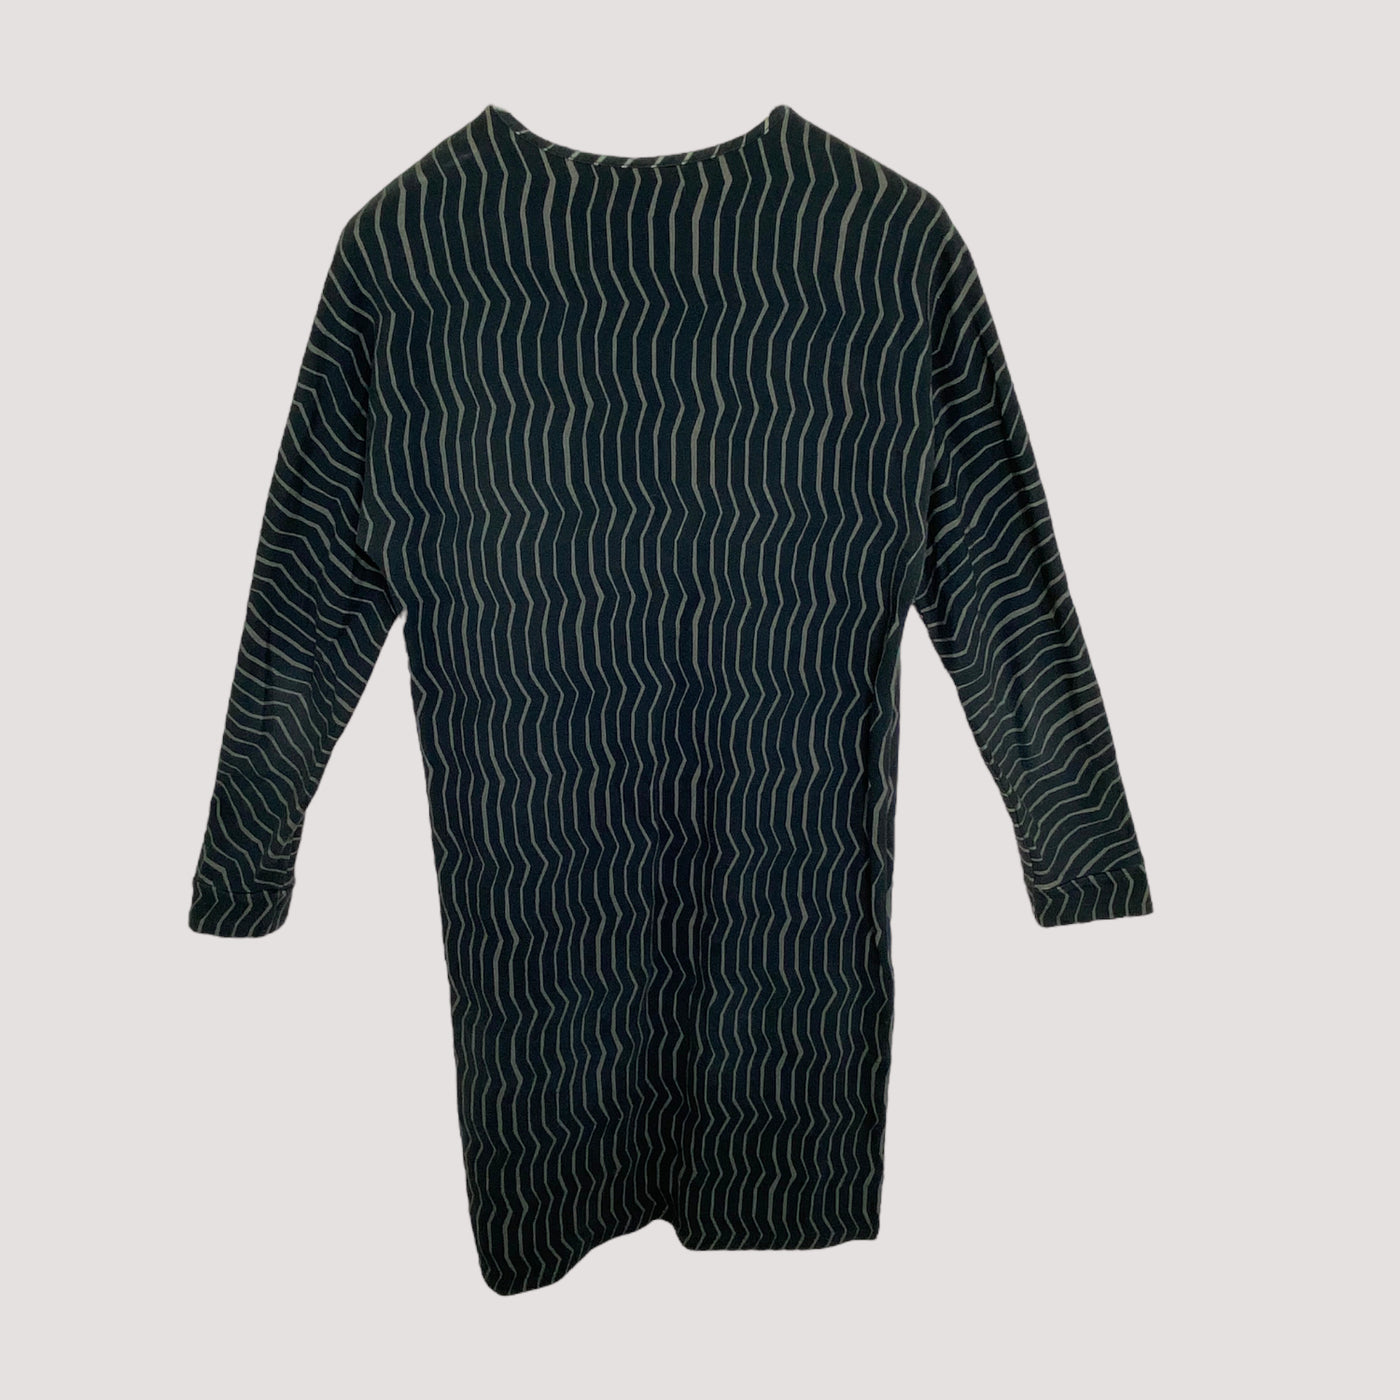 Vimma sweater dress, stripes | women S/M